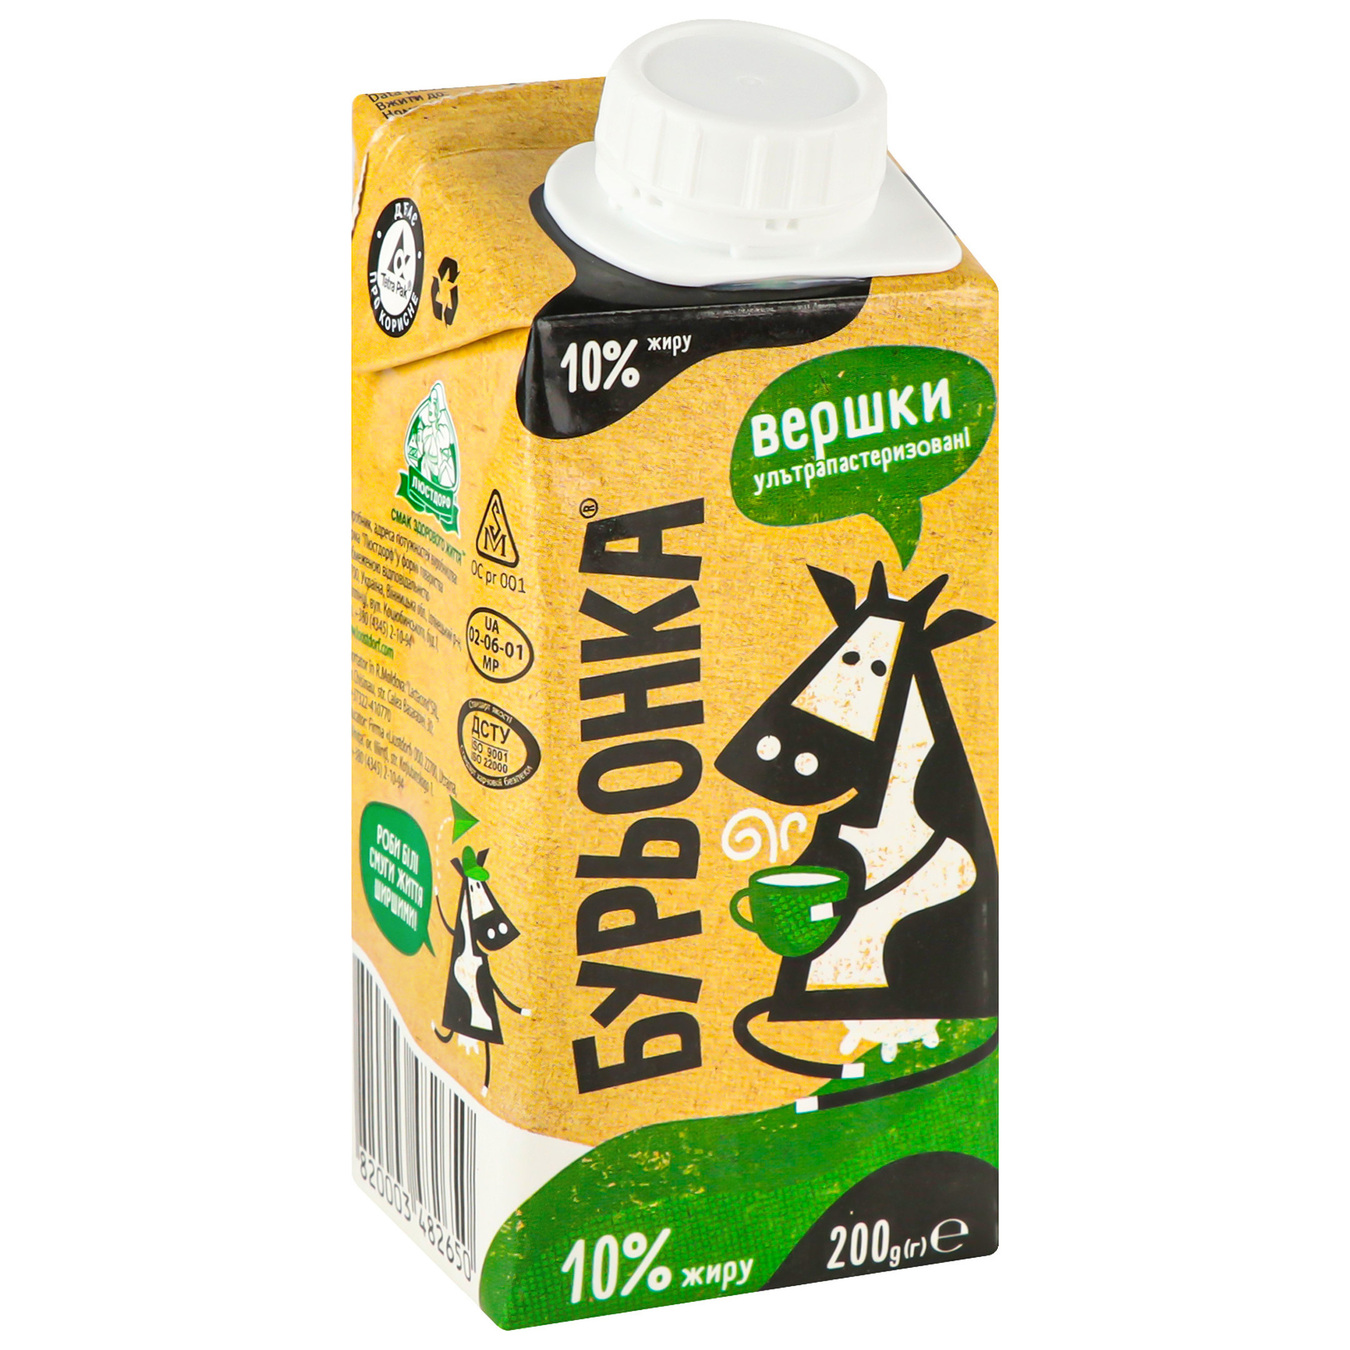 Creams Burenka ultrapasteurized 10% 200g 3